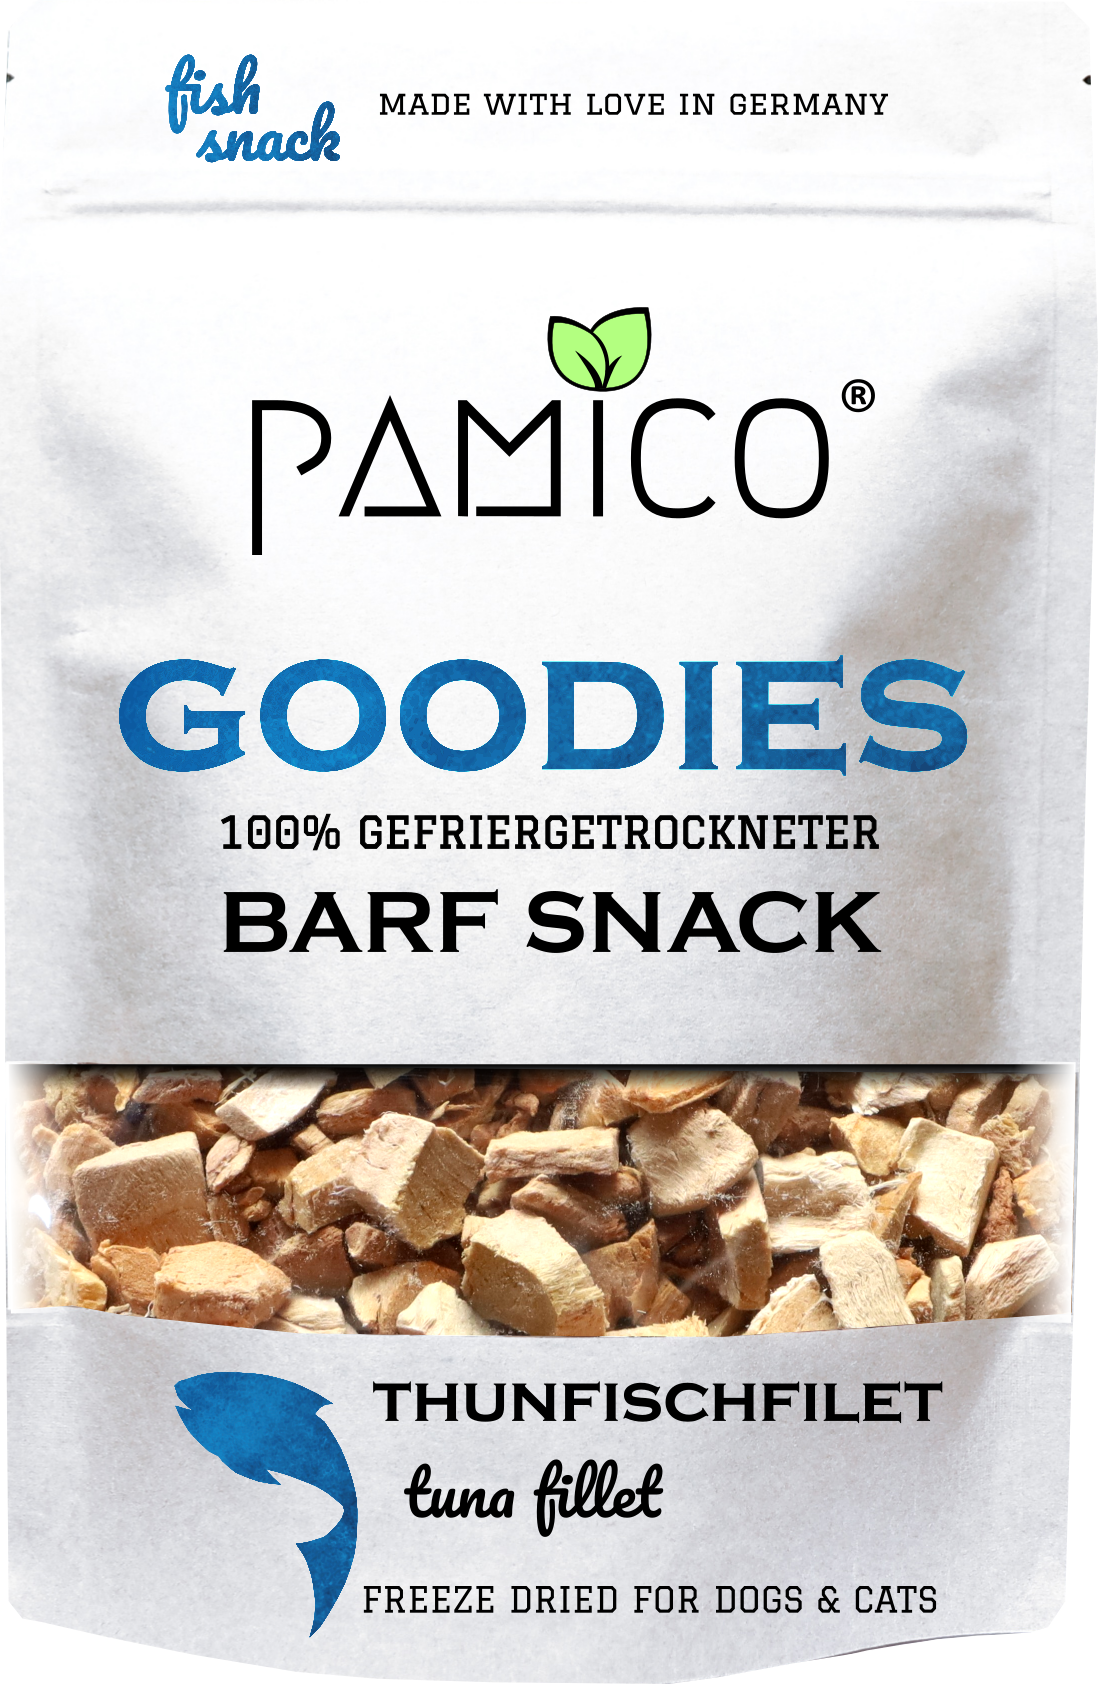 Thunfischfilet gefriergetrocknet - BARF Snack Goodies for dogs & cats